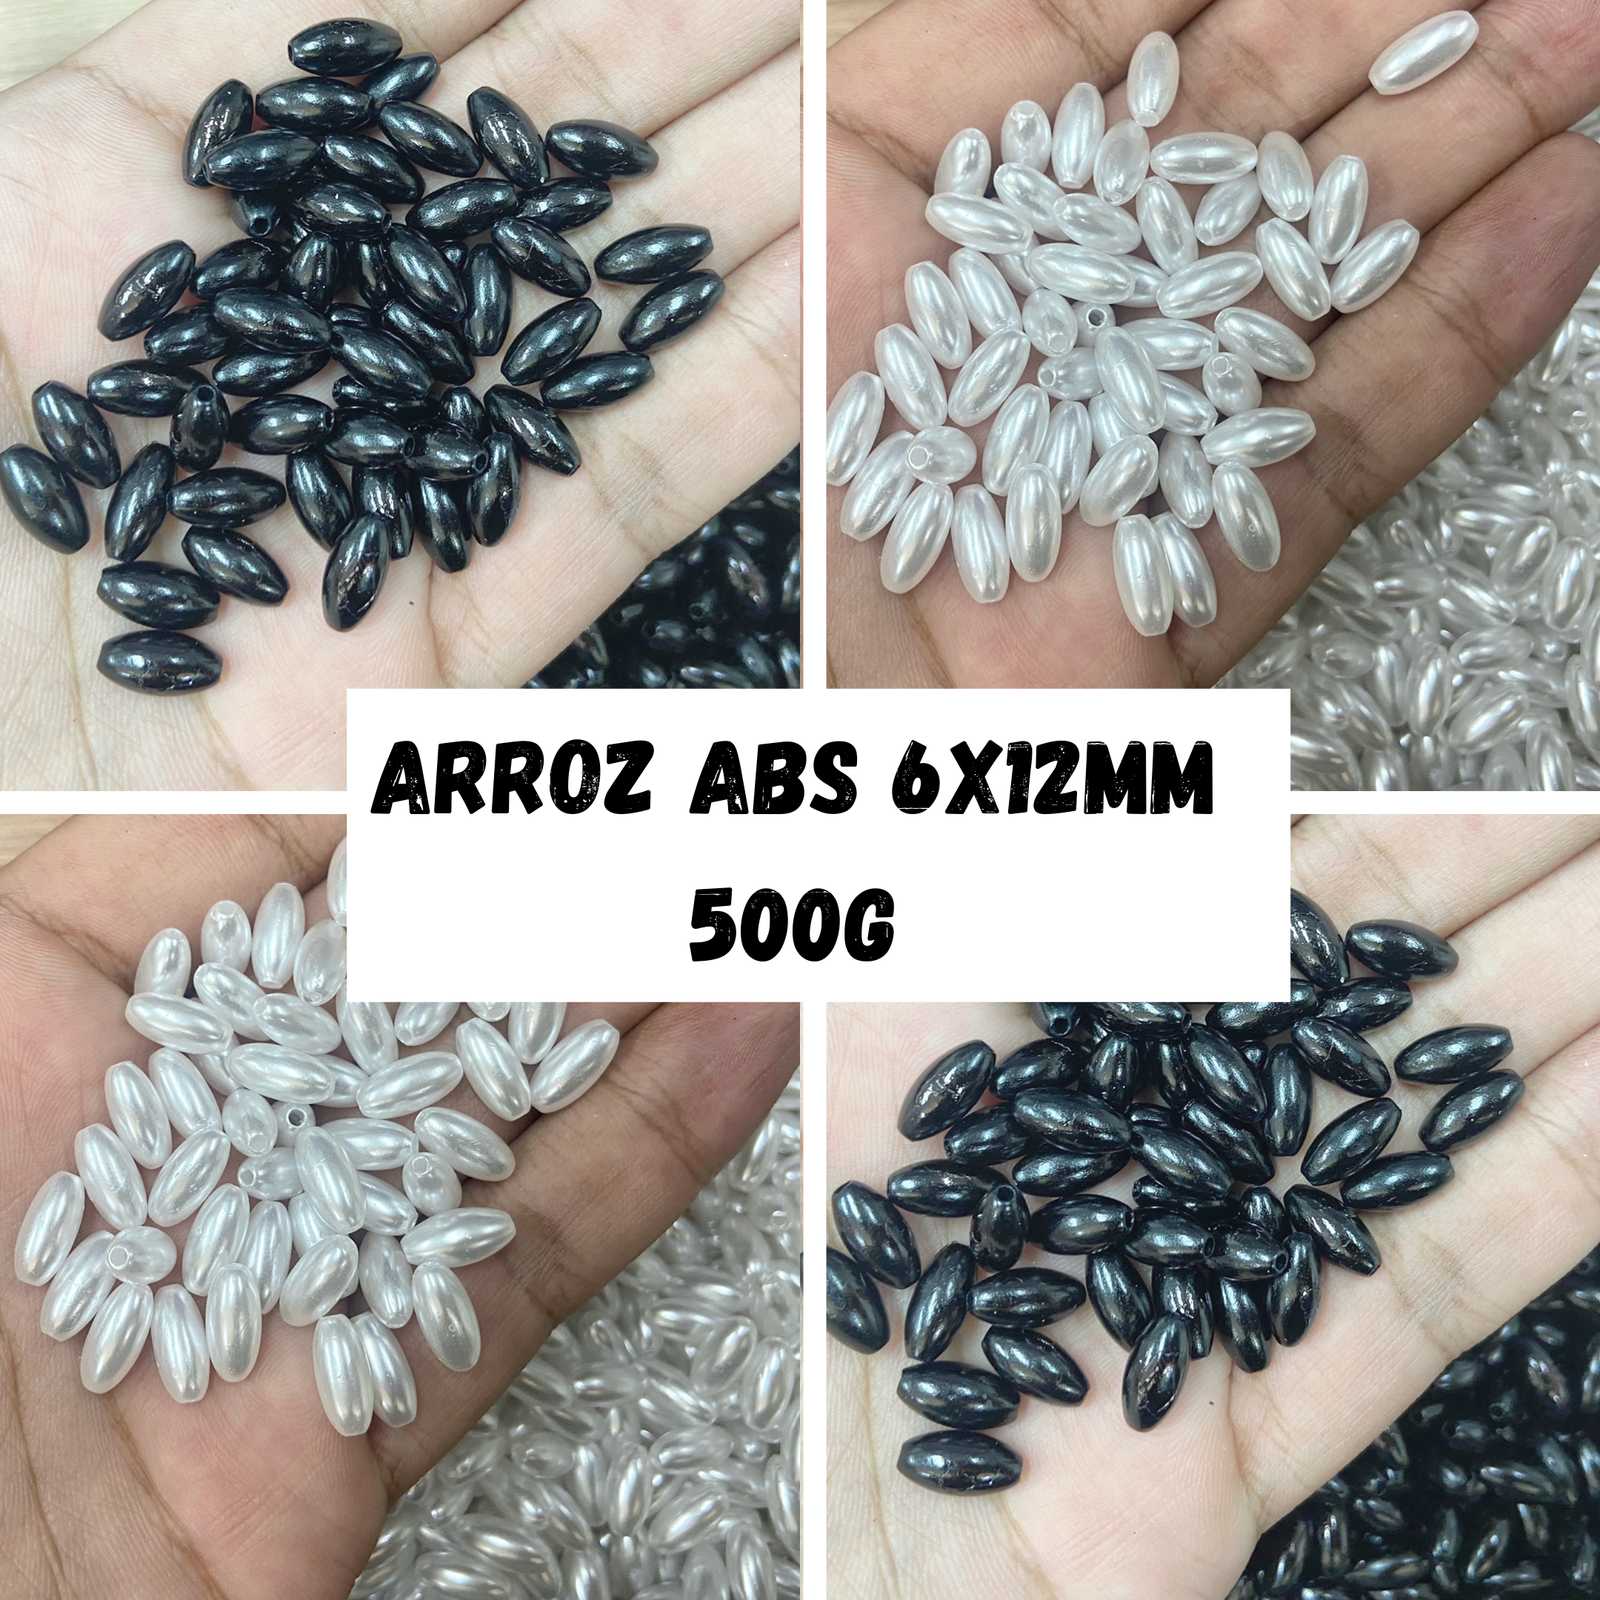 Arroz ABS 6x12mm - 500g